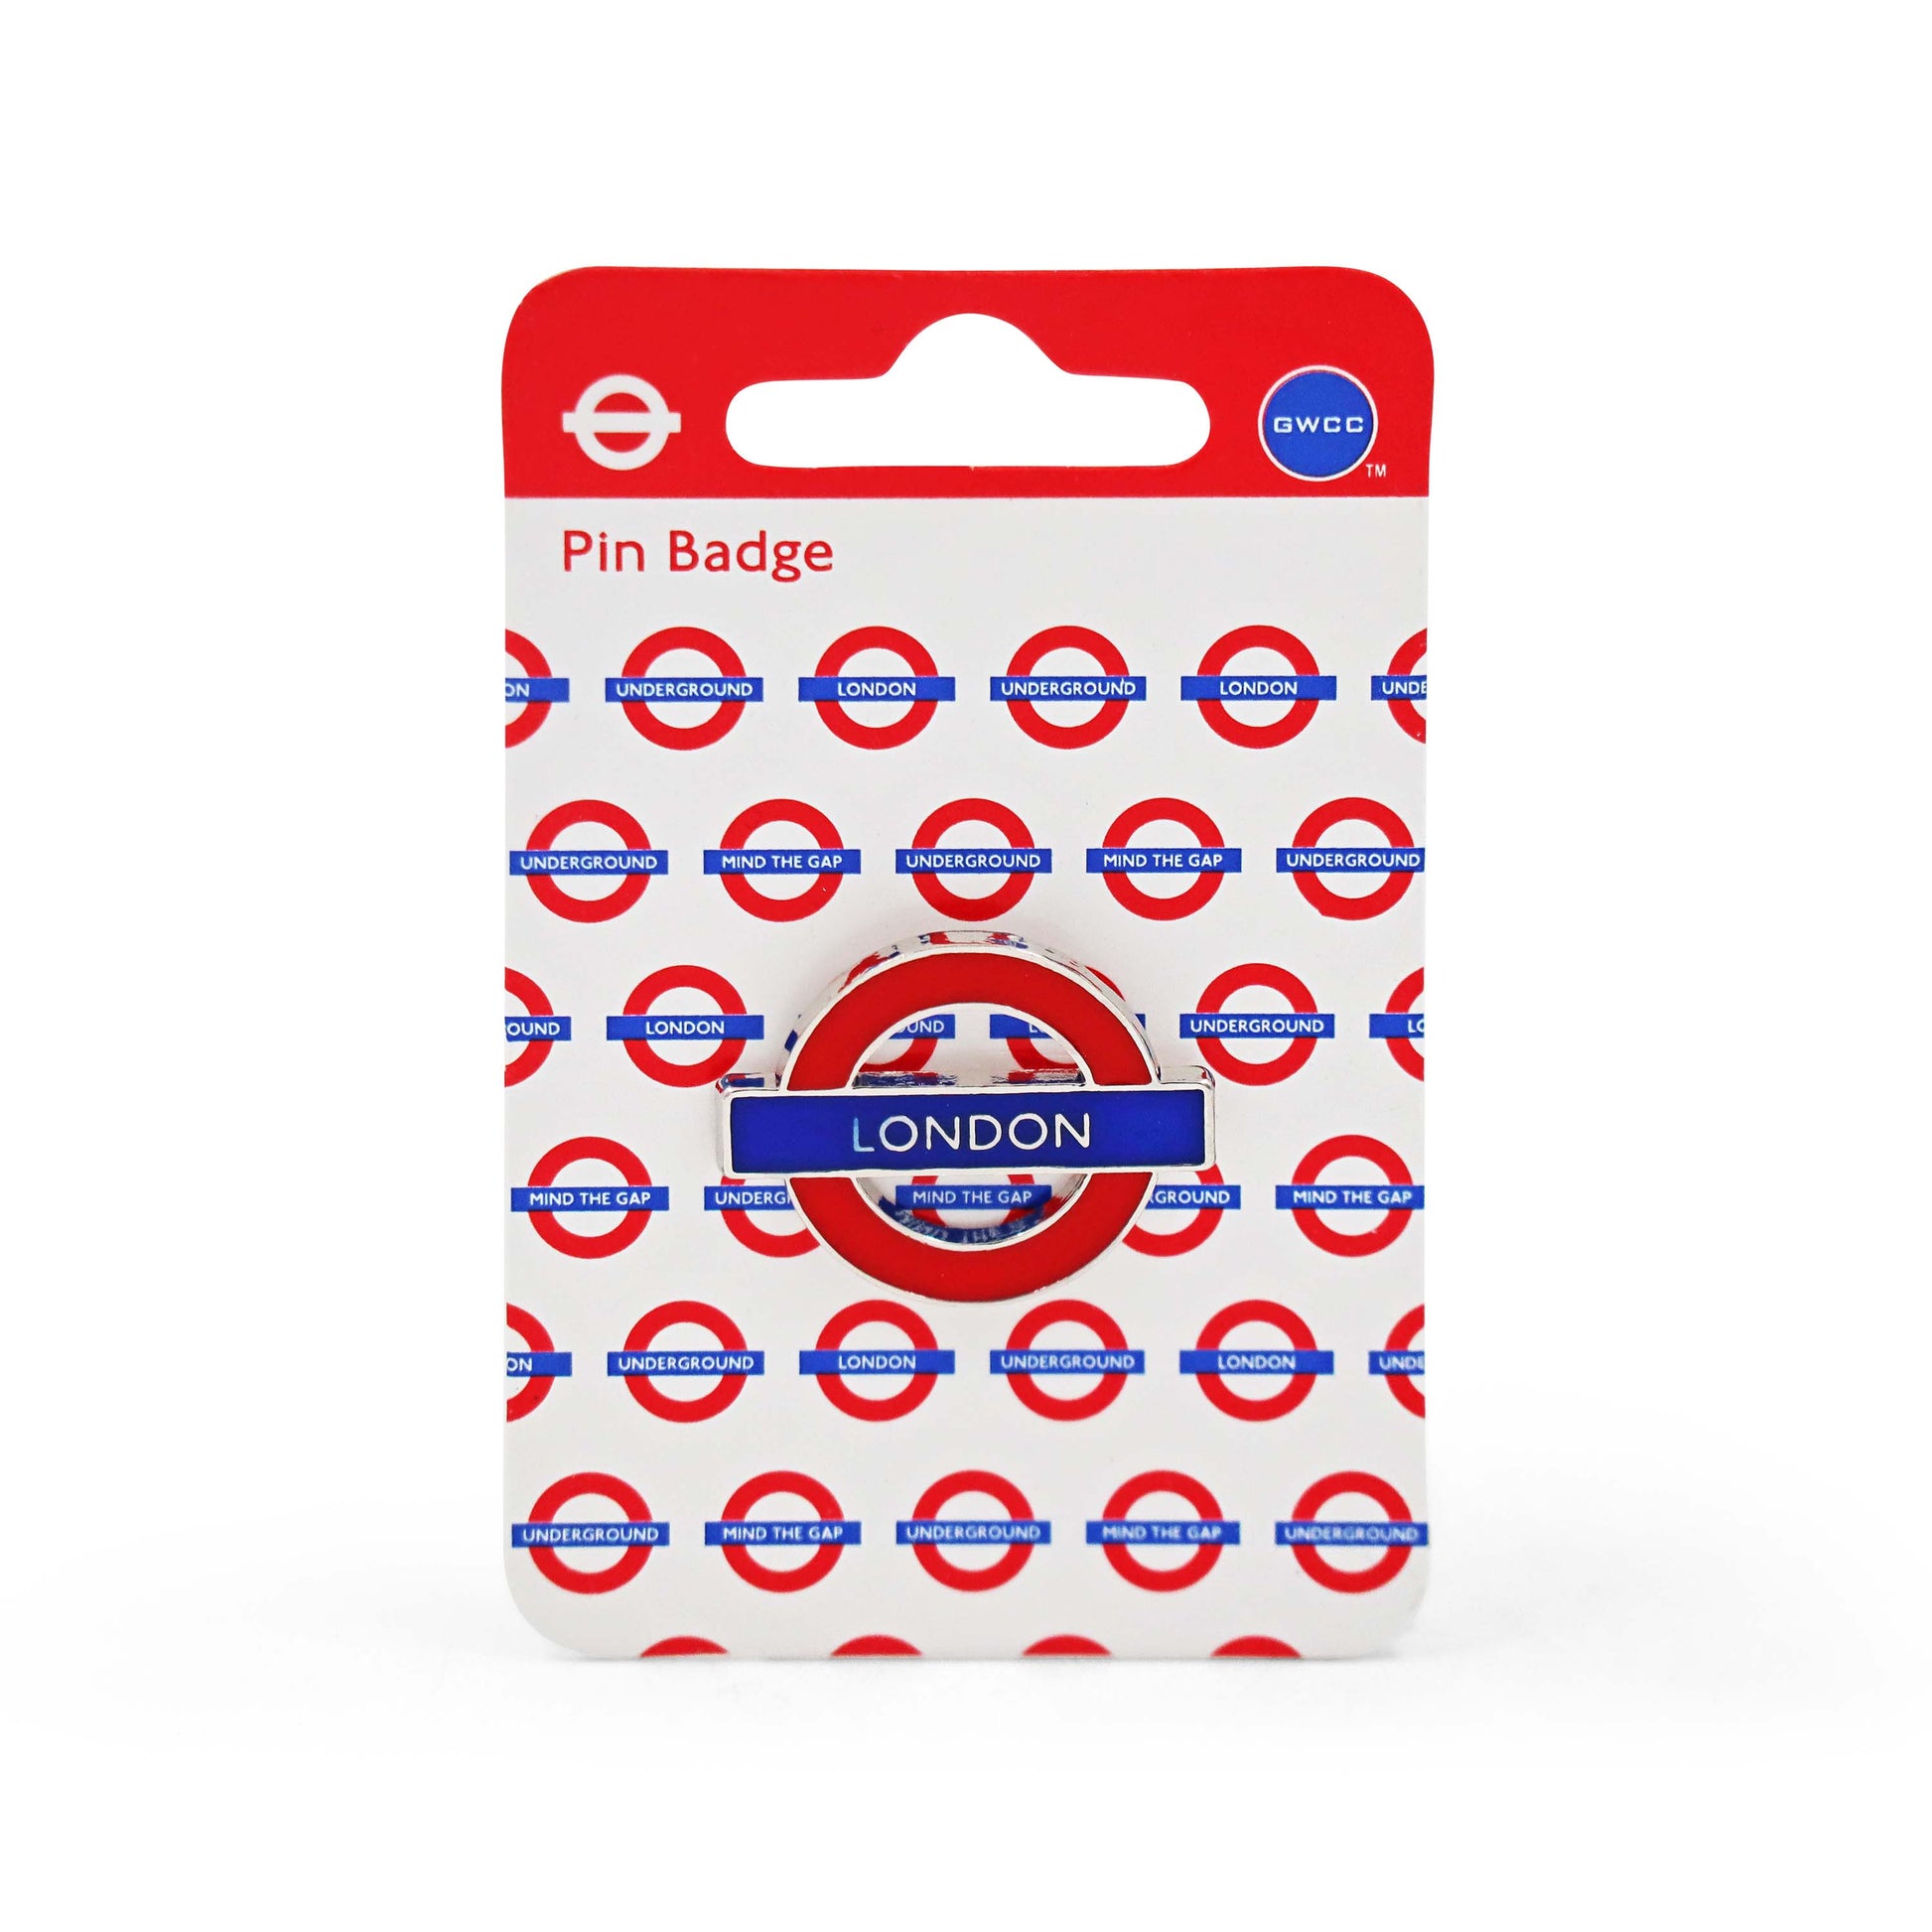 London Underground London Pin Badge